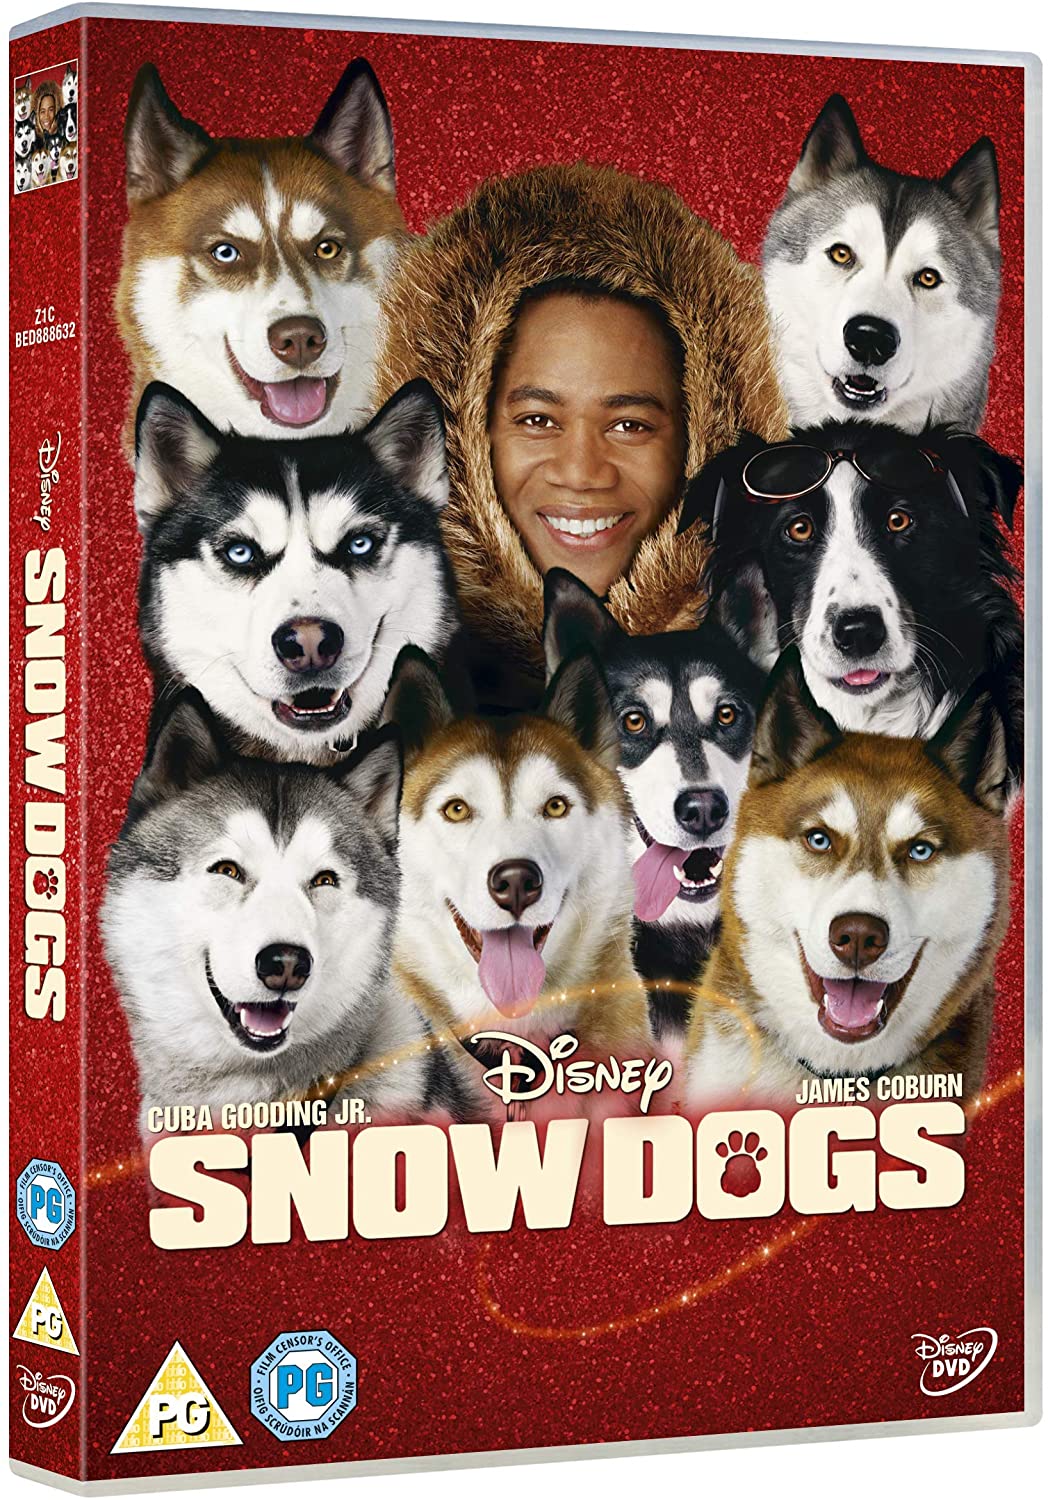 Snow Dogs - Family/Comedy [DVD]